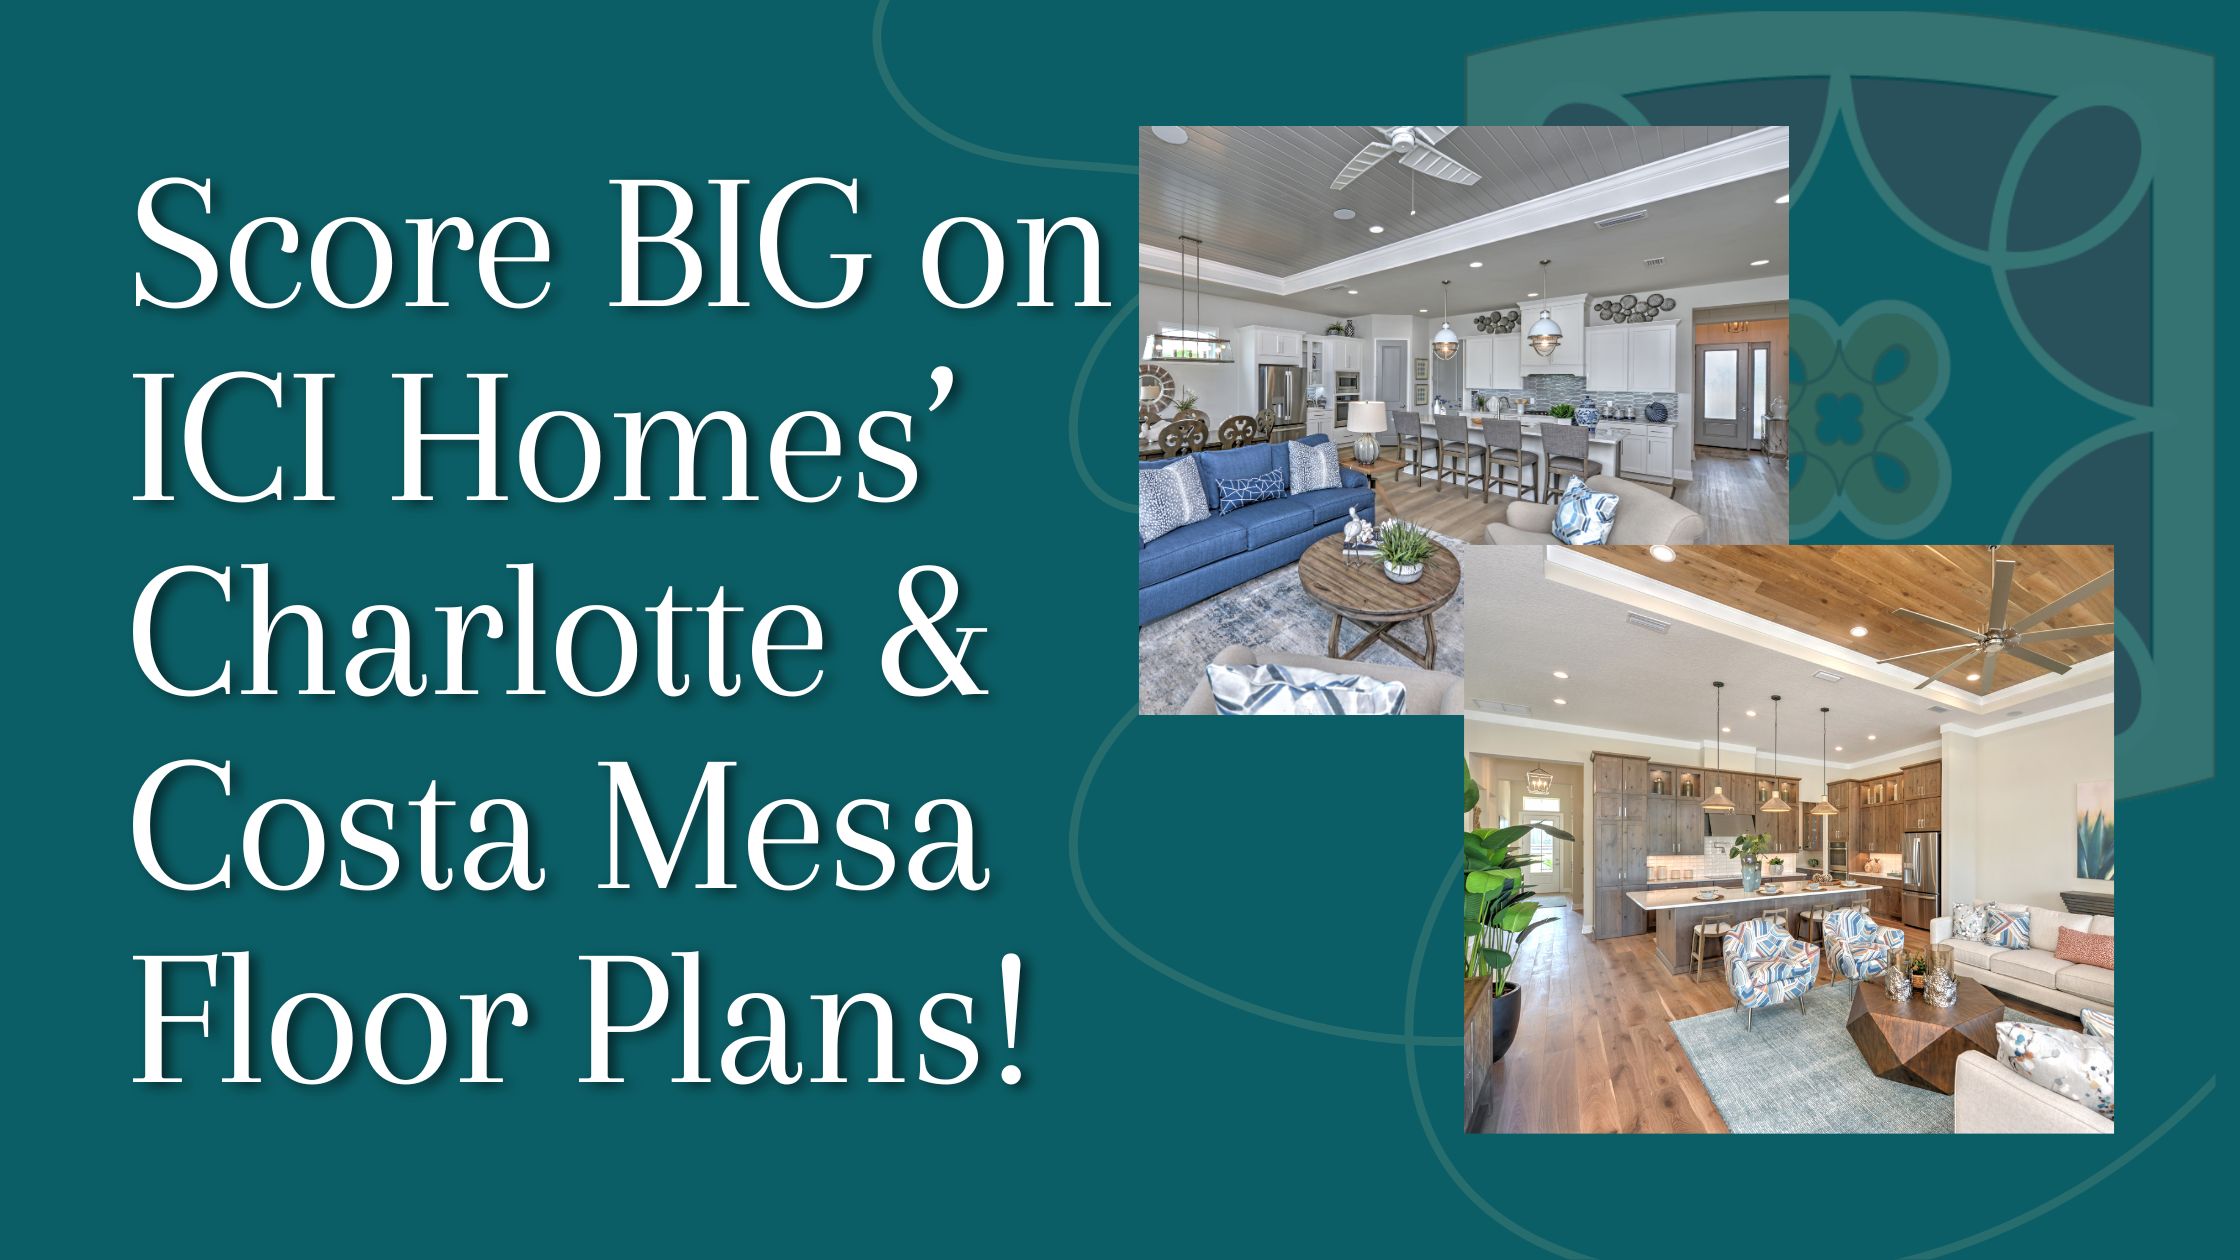 Score Big on Charlotte & Costa Mesa Floor Plans at Tamaya - Tamaya Floorplans